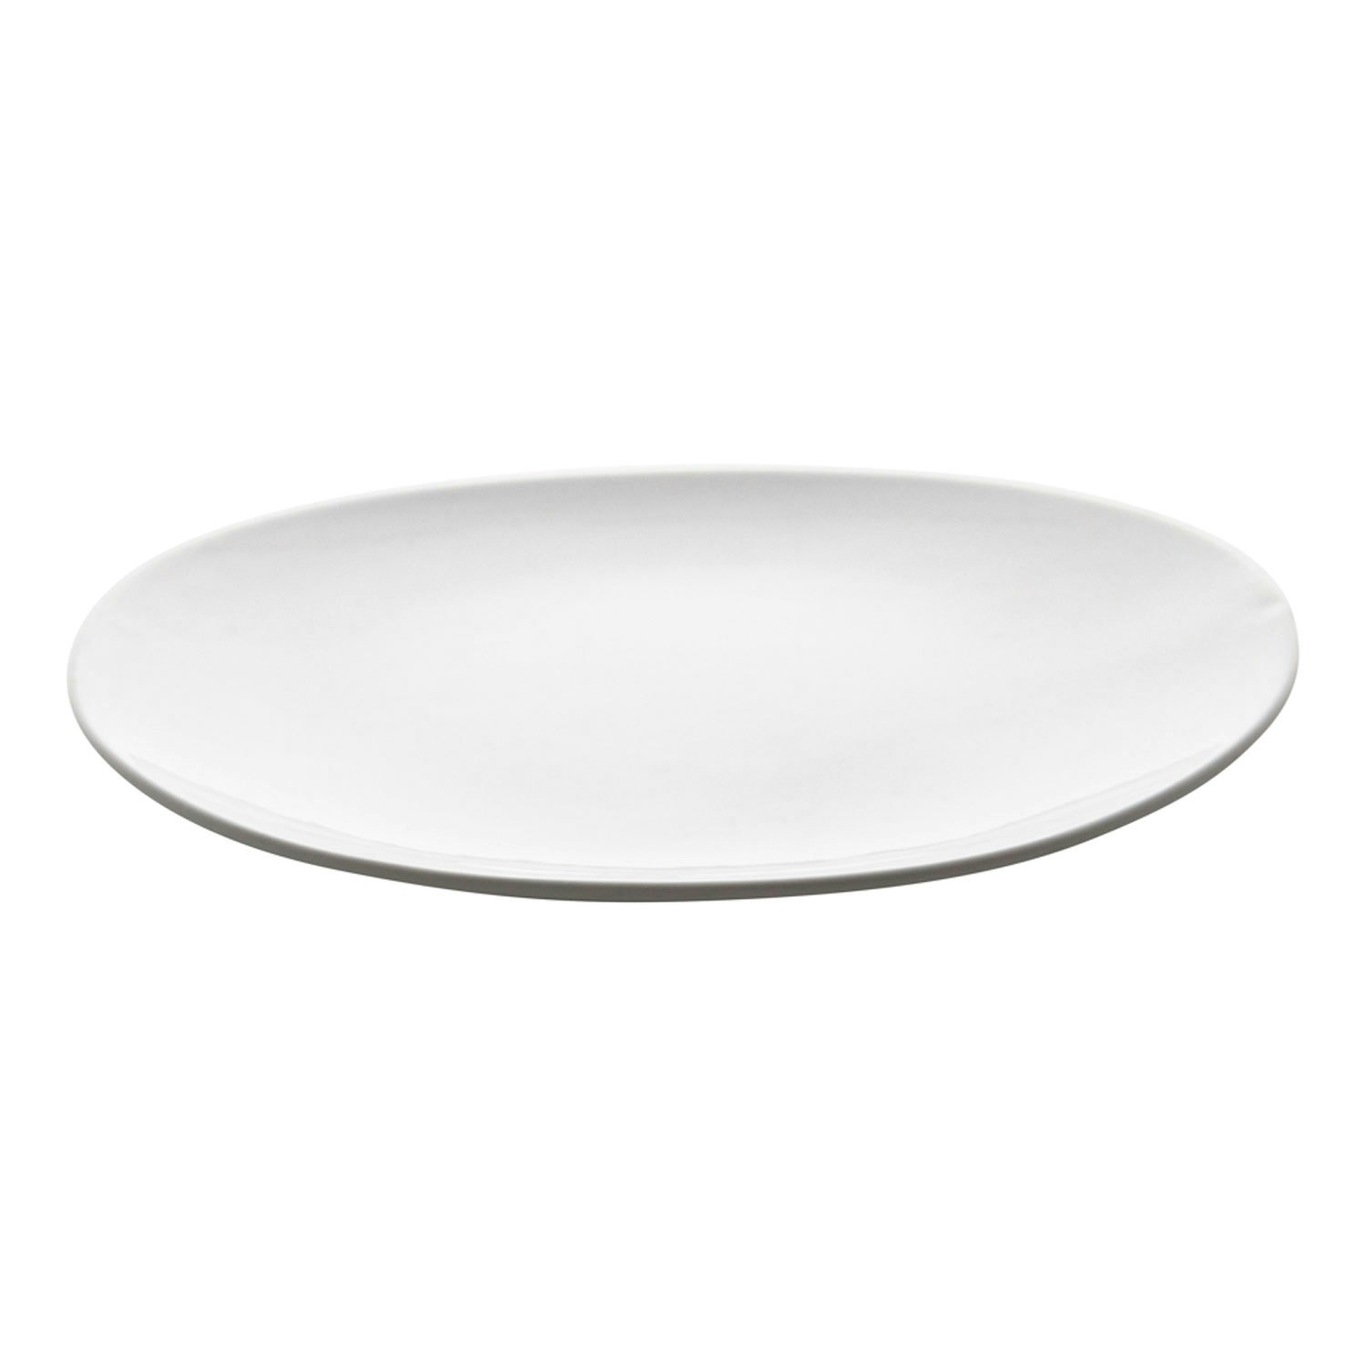 Shell Plate 27,5x28 cm, White